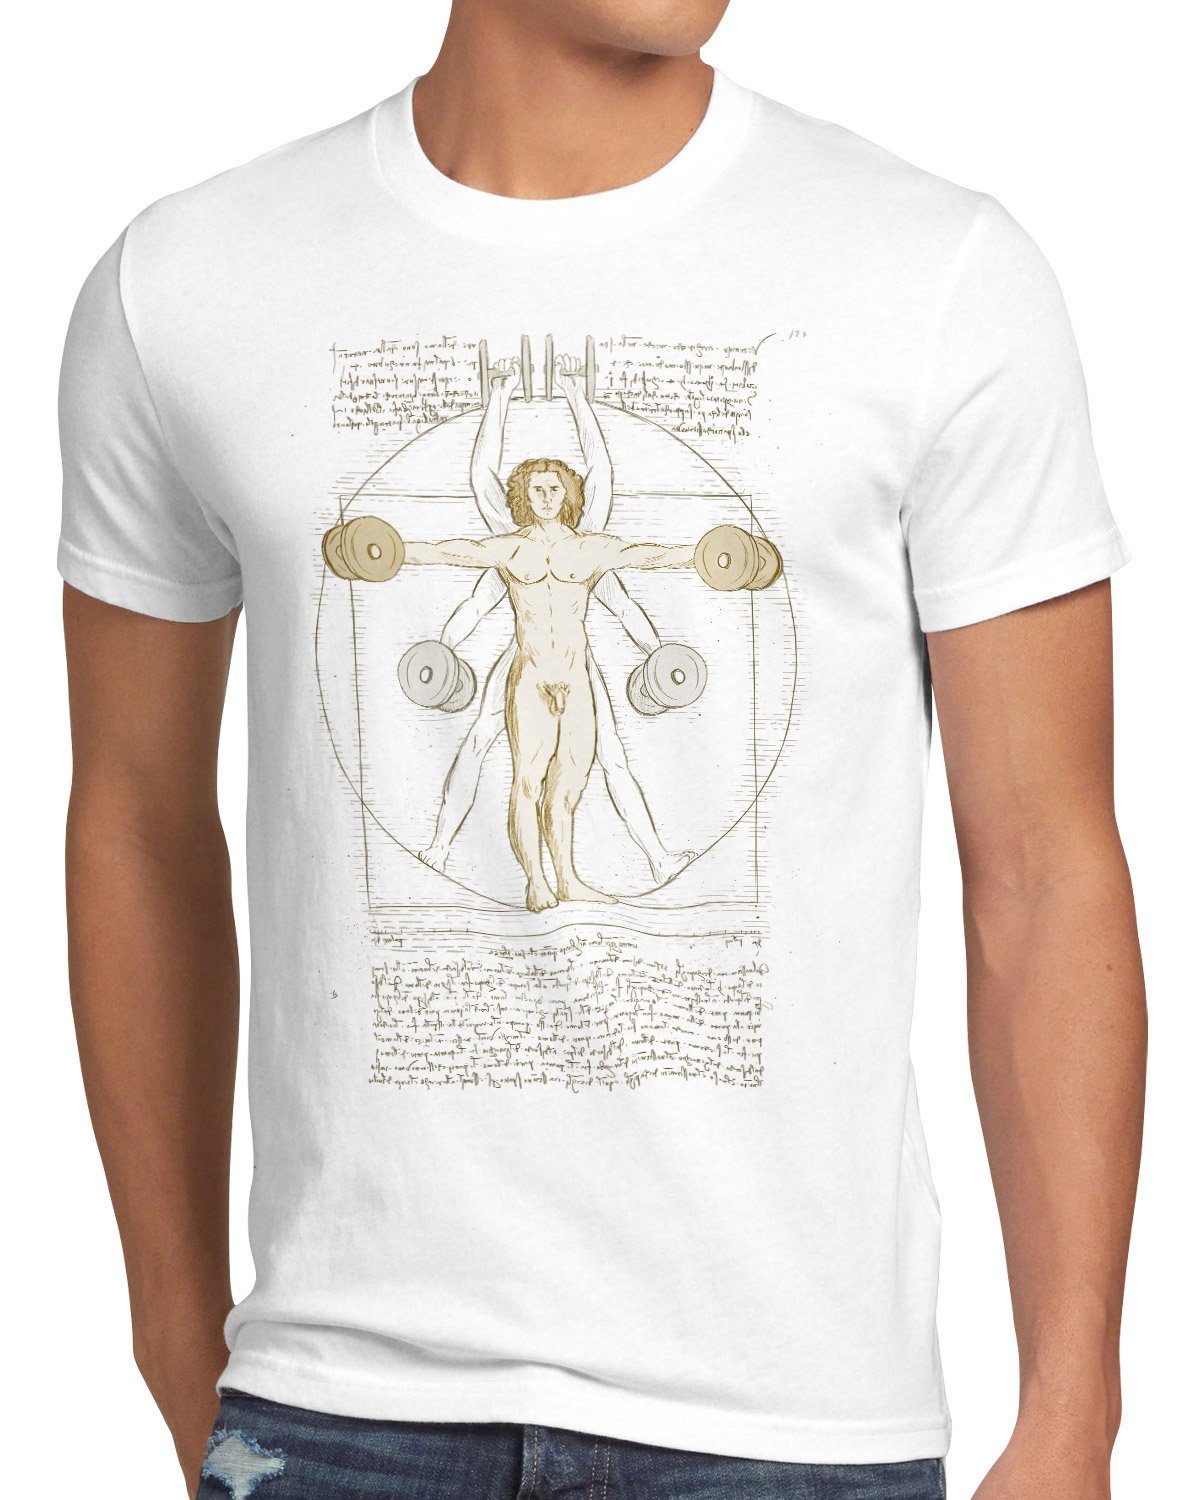 style3 Print-Shirt Herren T-Shirt Vitruvianischer Mensch mit Kurzhantel butterfly rudern training weiß